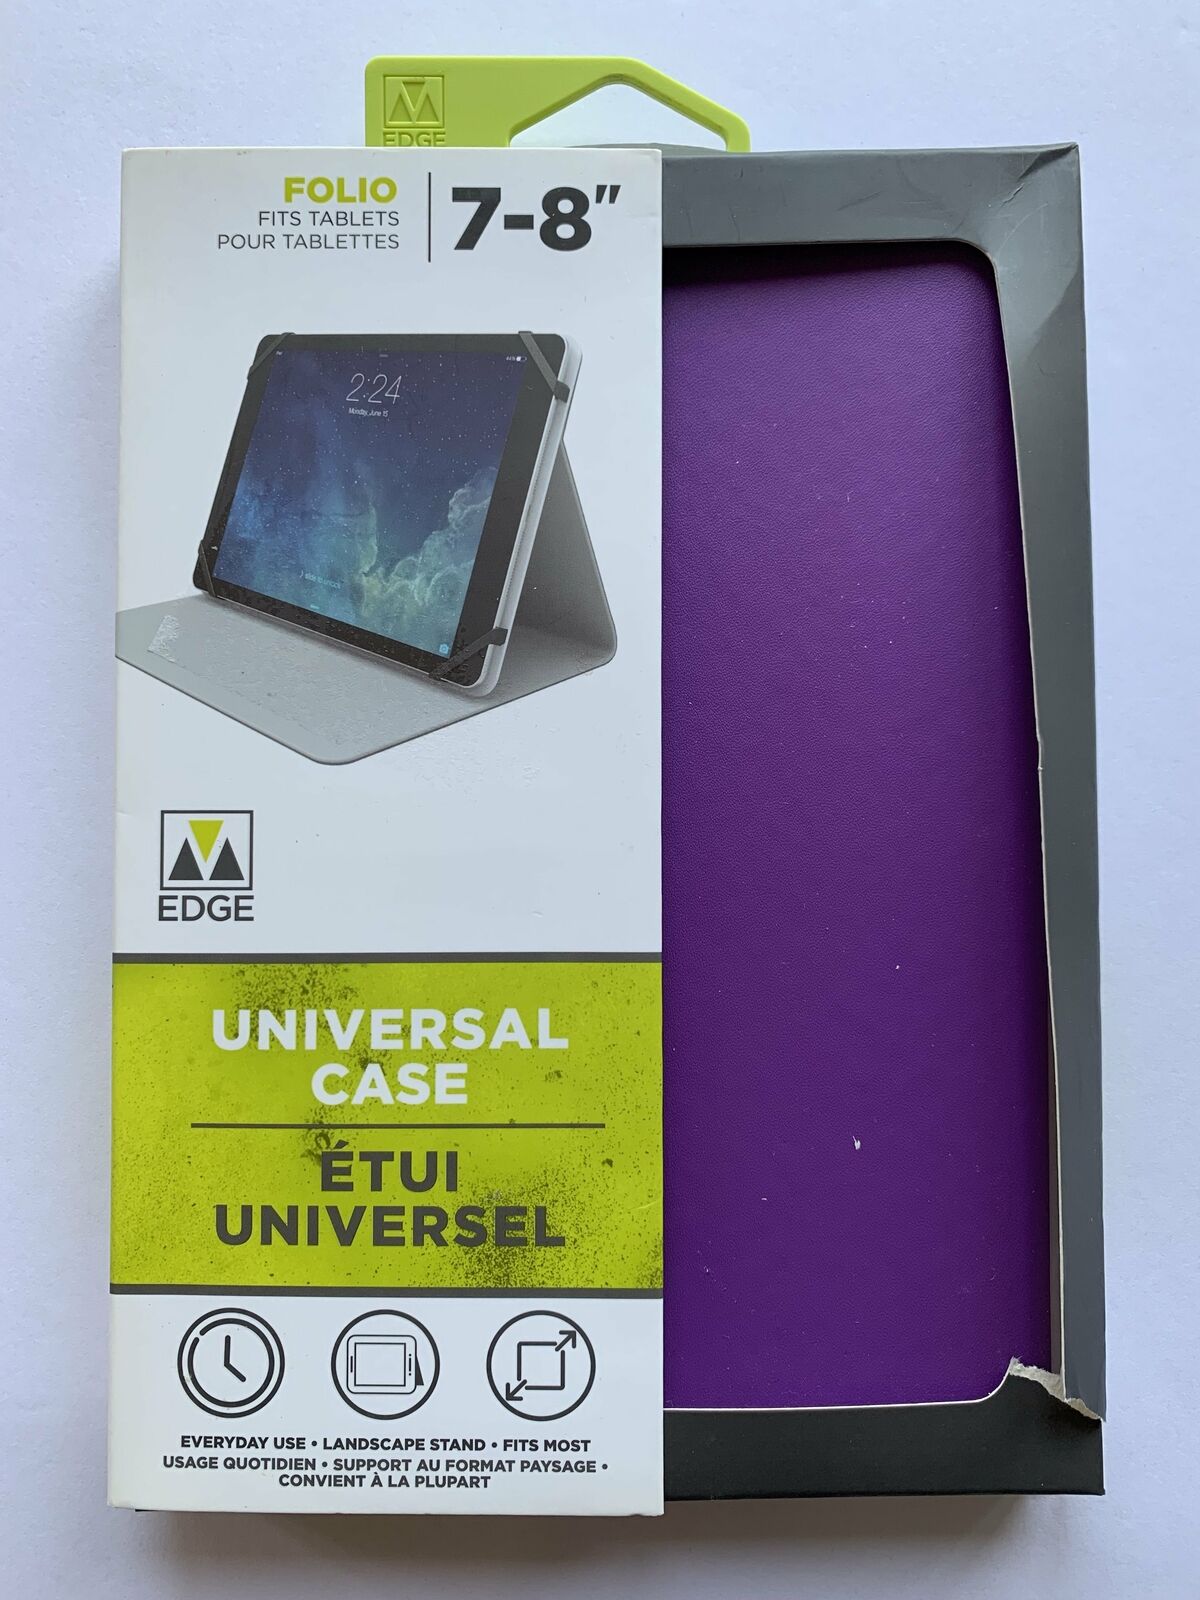 MEdge Universal Case Folio Fits 7-8” Tablets Landscape Stand Multi Fit Apple Sam